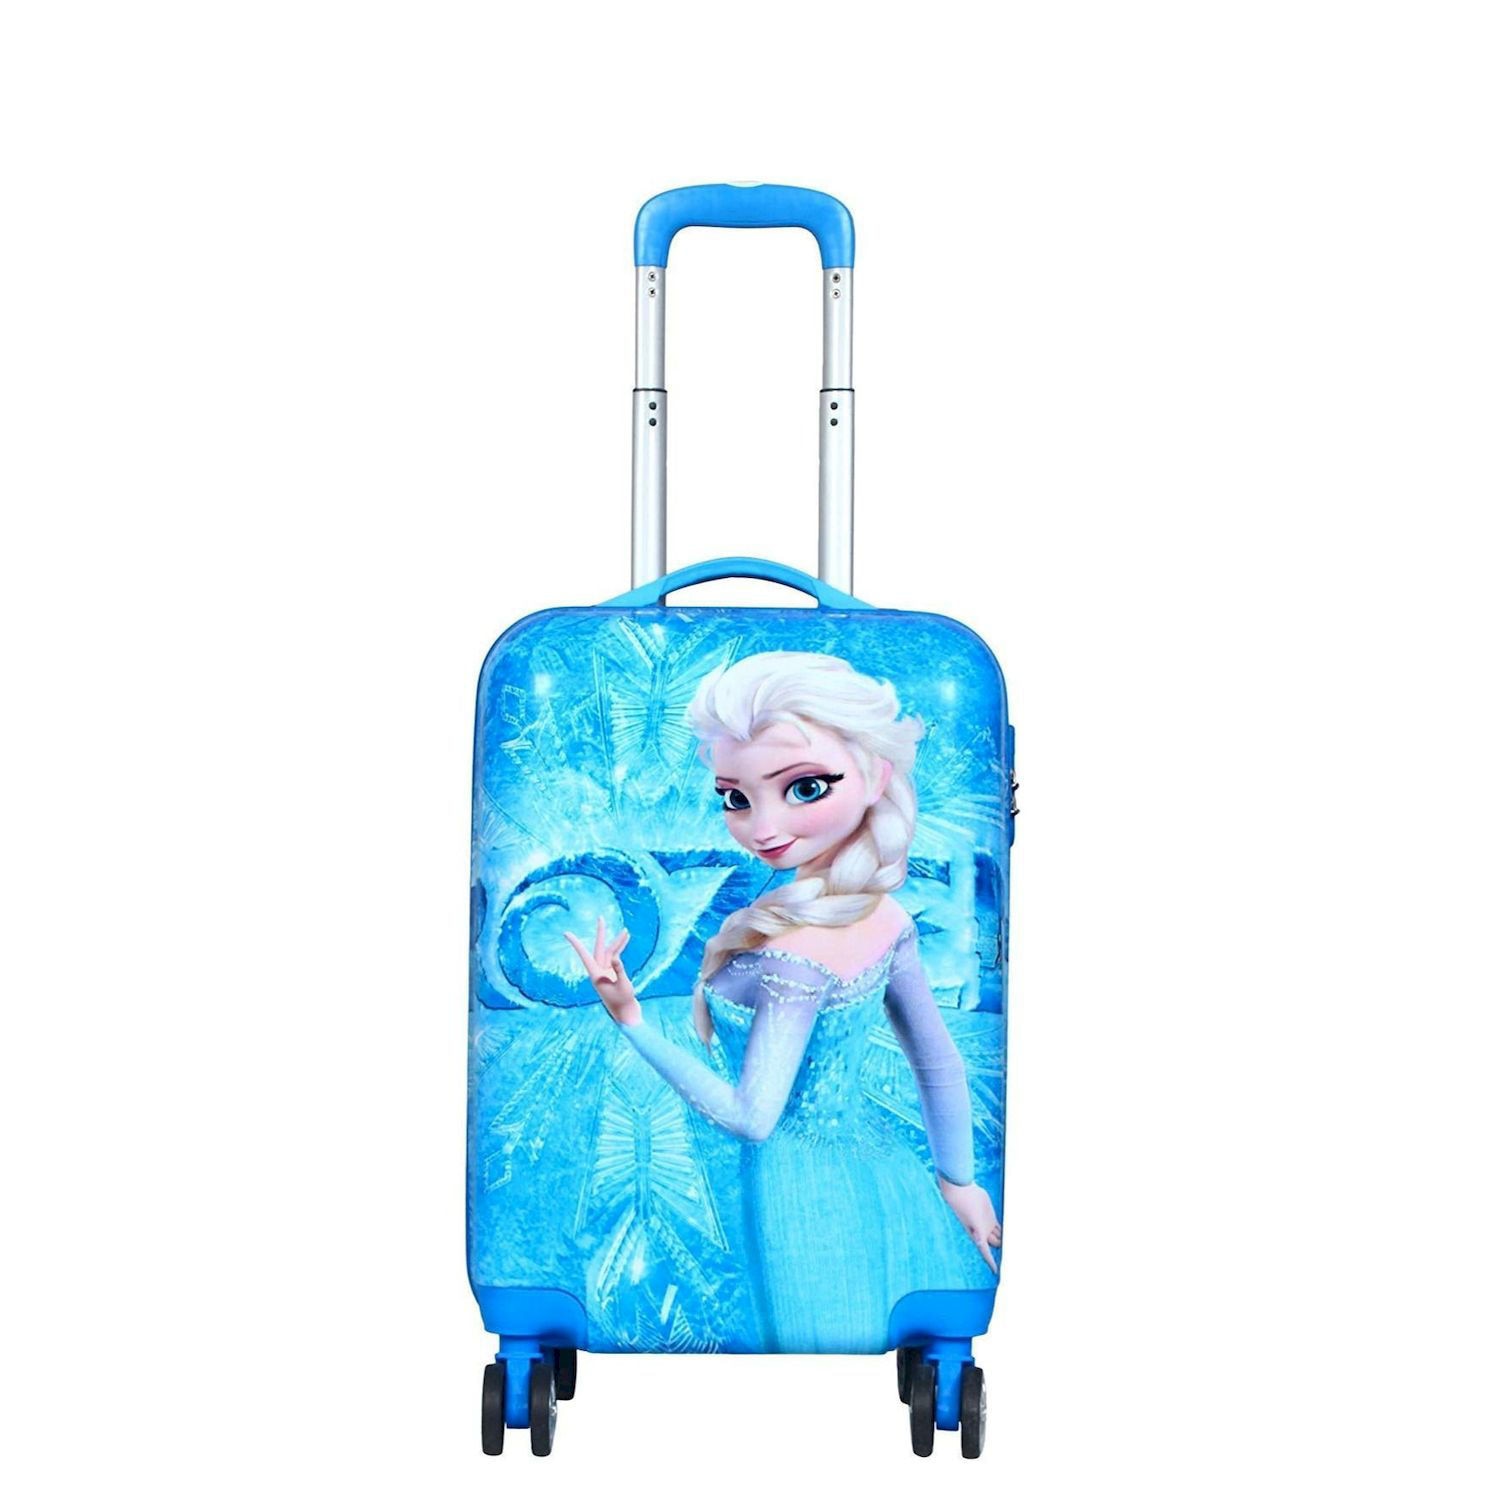 Shop GENERIC Elsa Printed Kids Luggage Bag with Wheels | Dragonmart ...